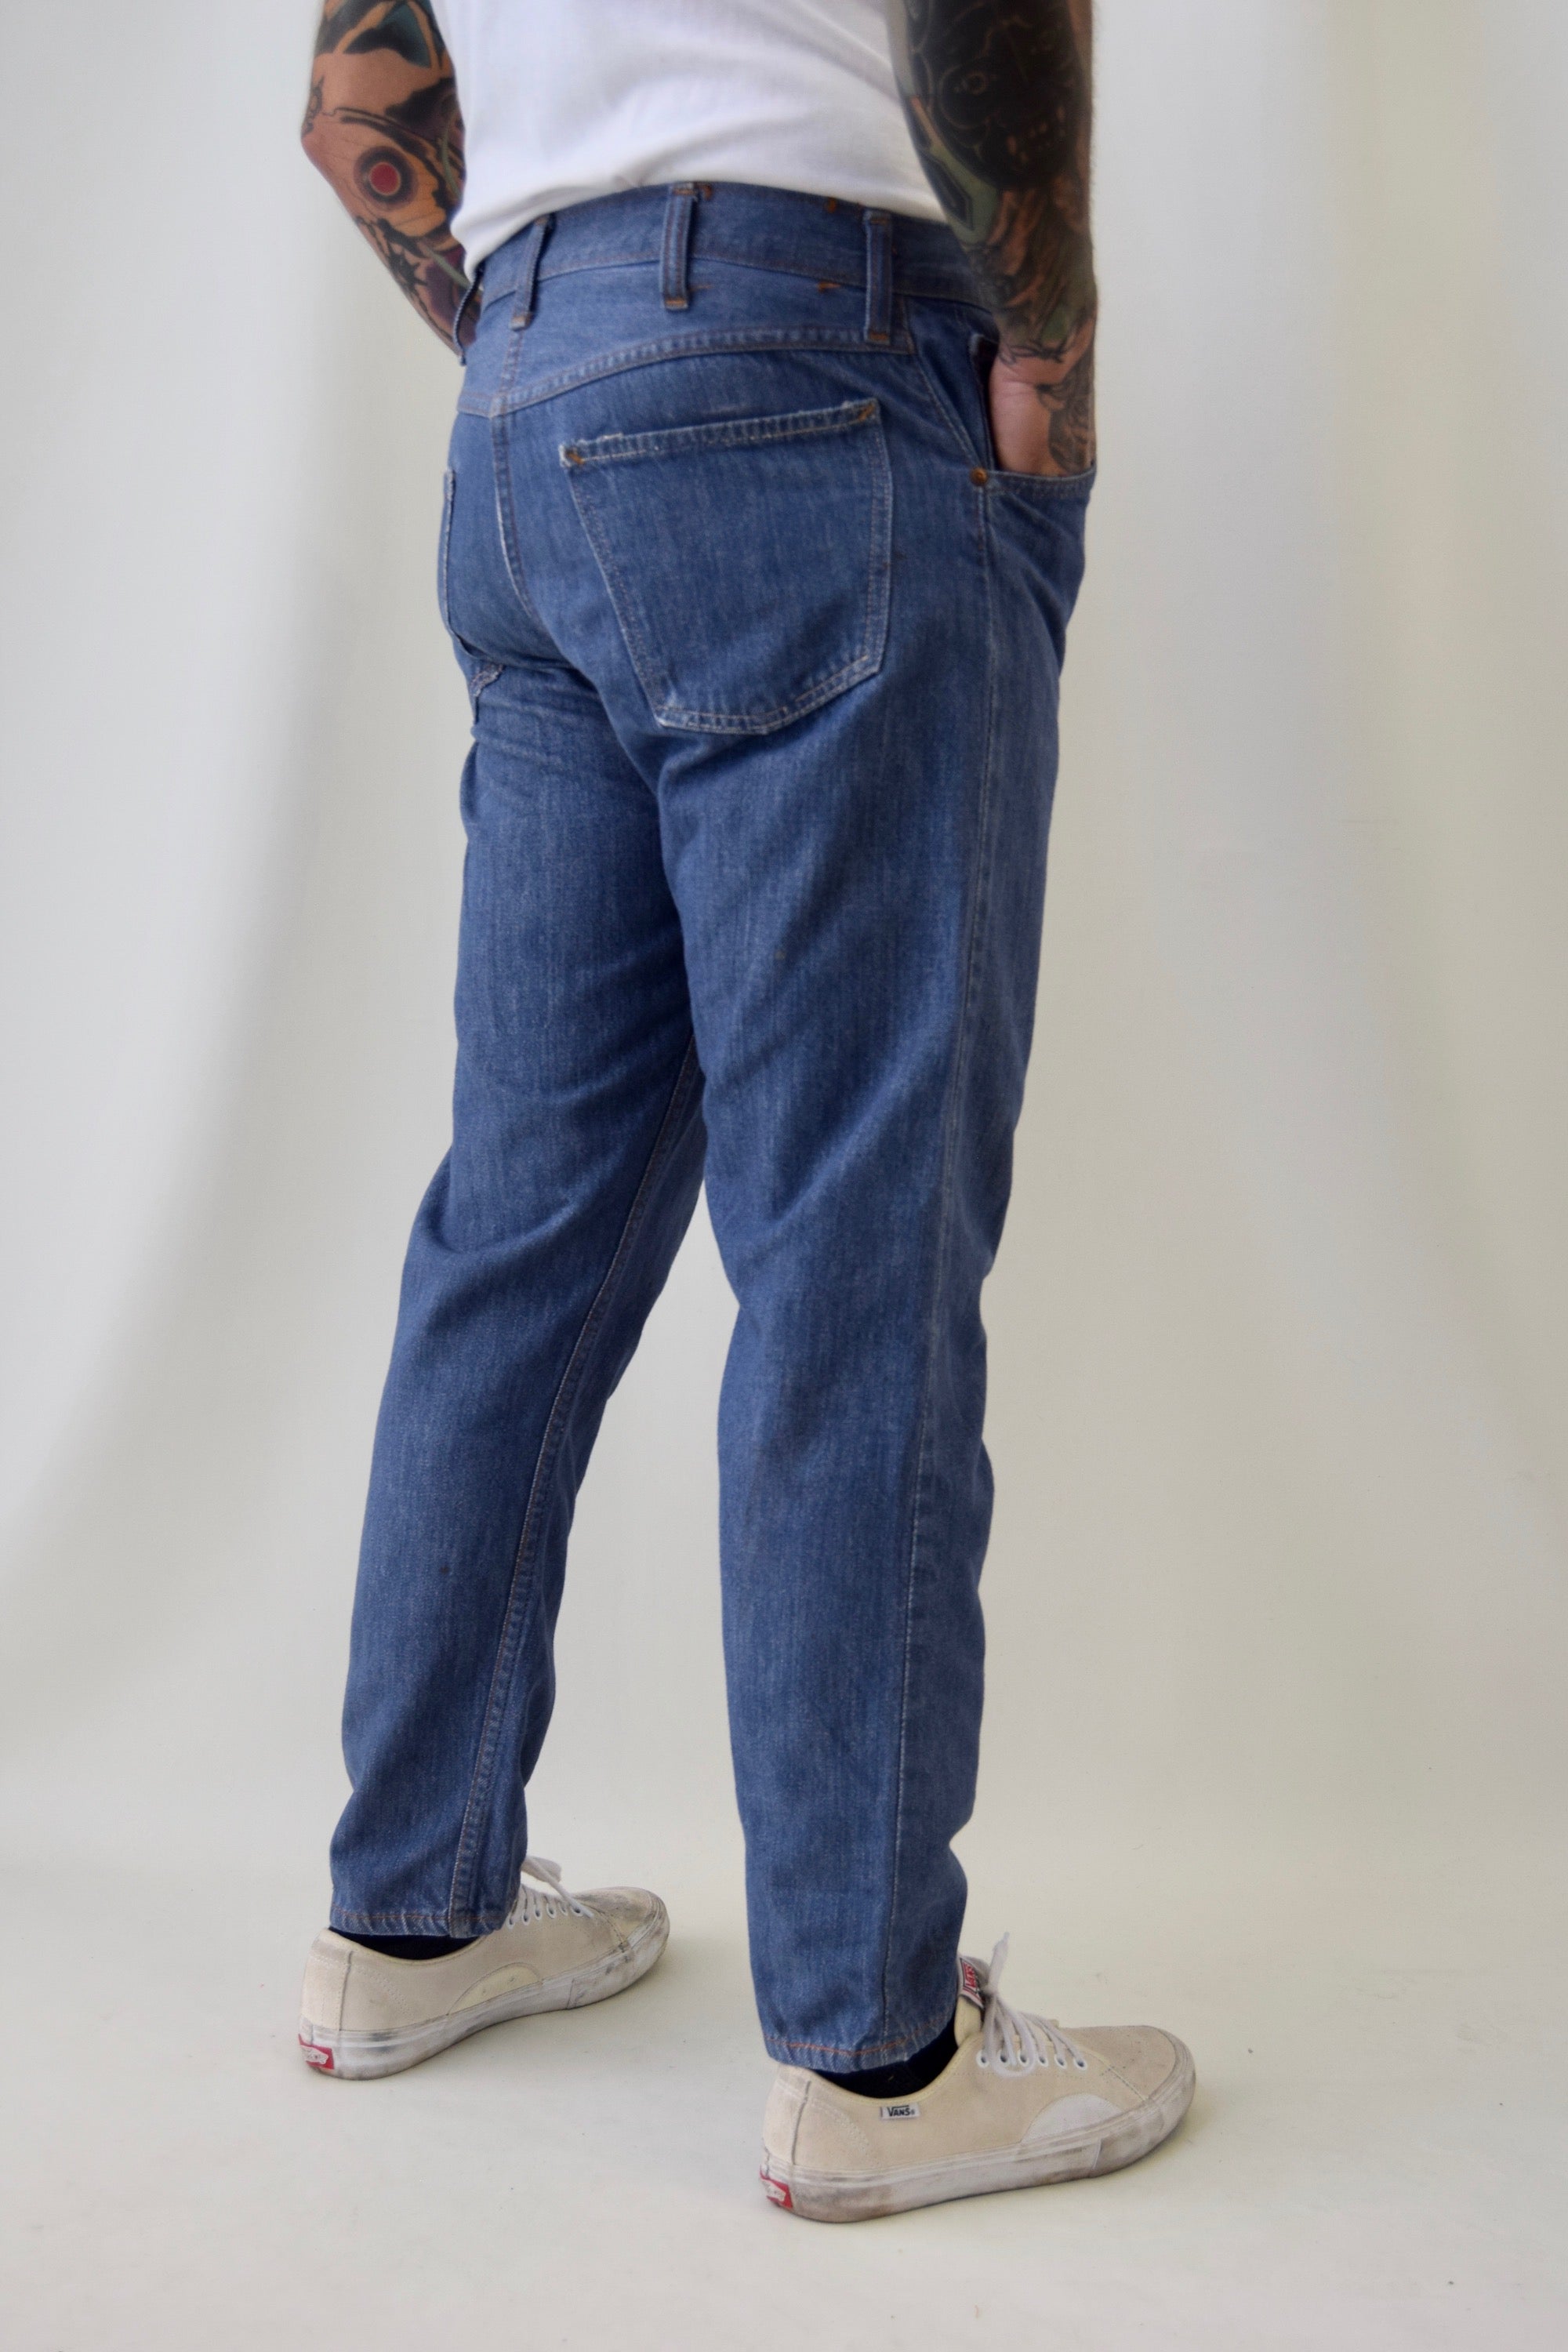 Vintage Montgomery Ward Scovill Zip Jeans